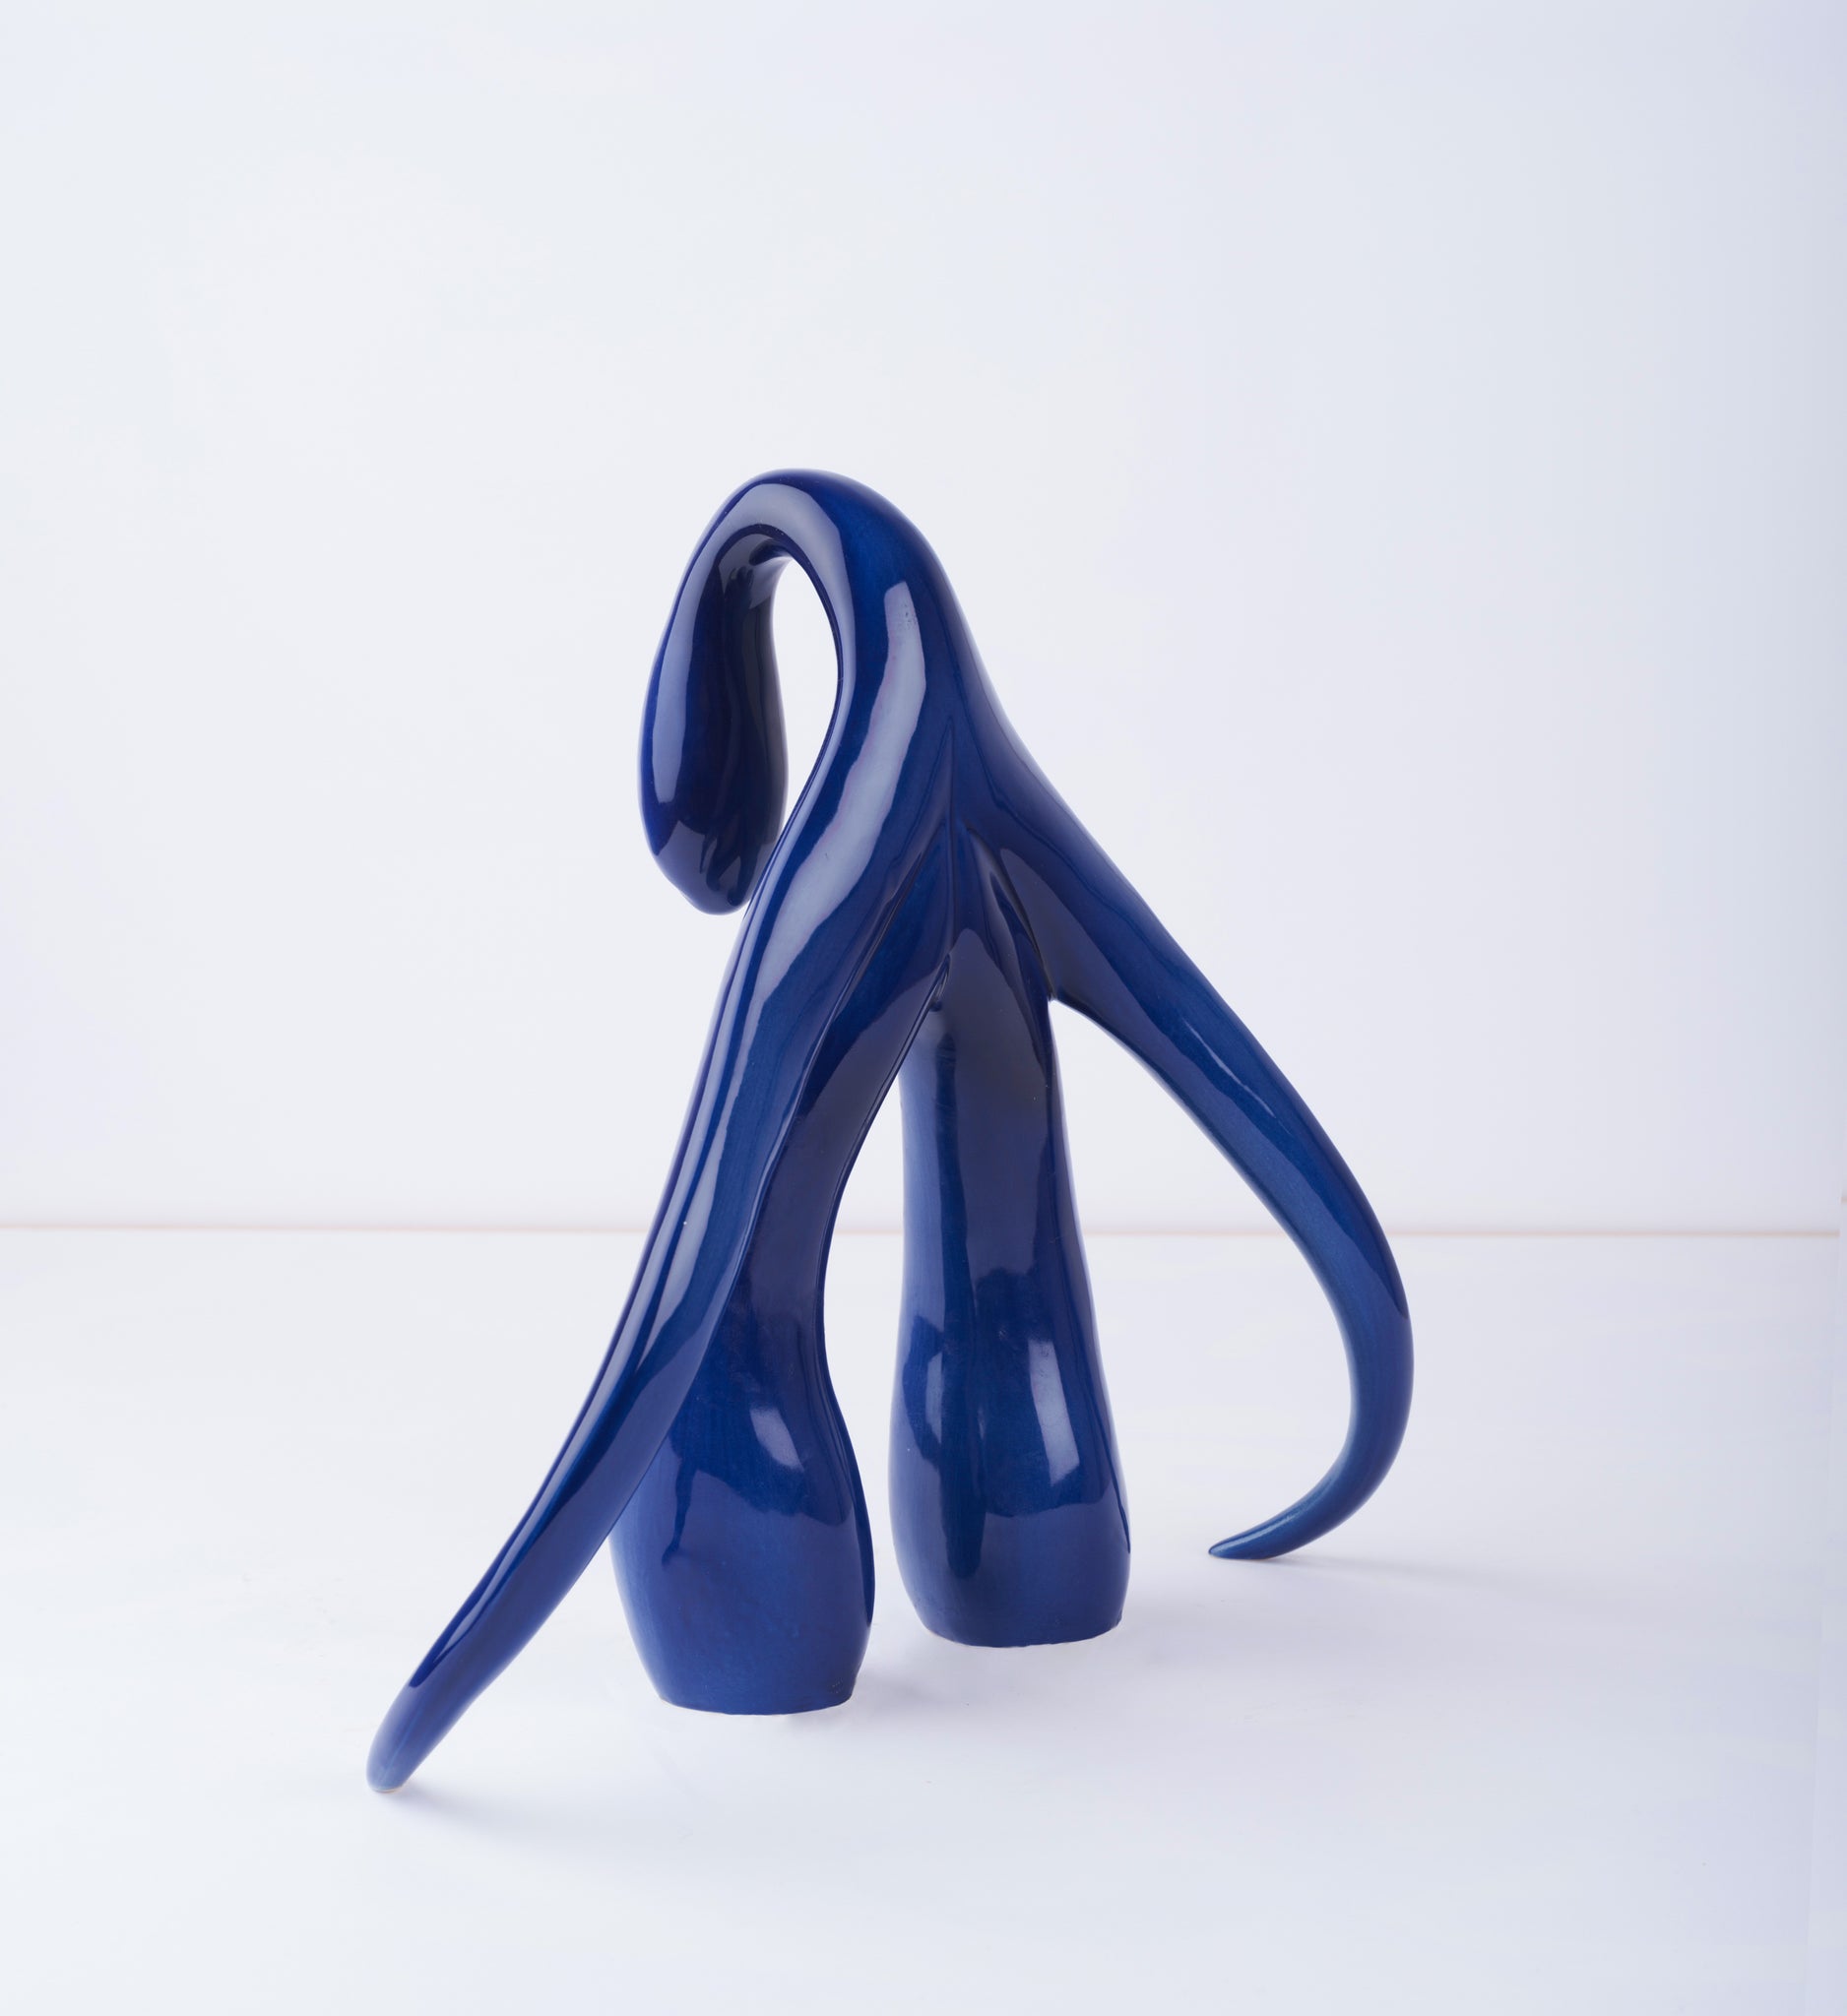 3/4 back view of "Swan Series" ceramic sculpture in cobalt by Sophia Wallace, 2022.